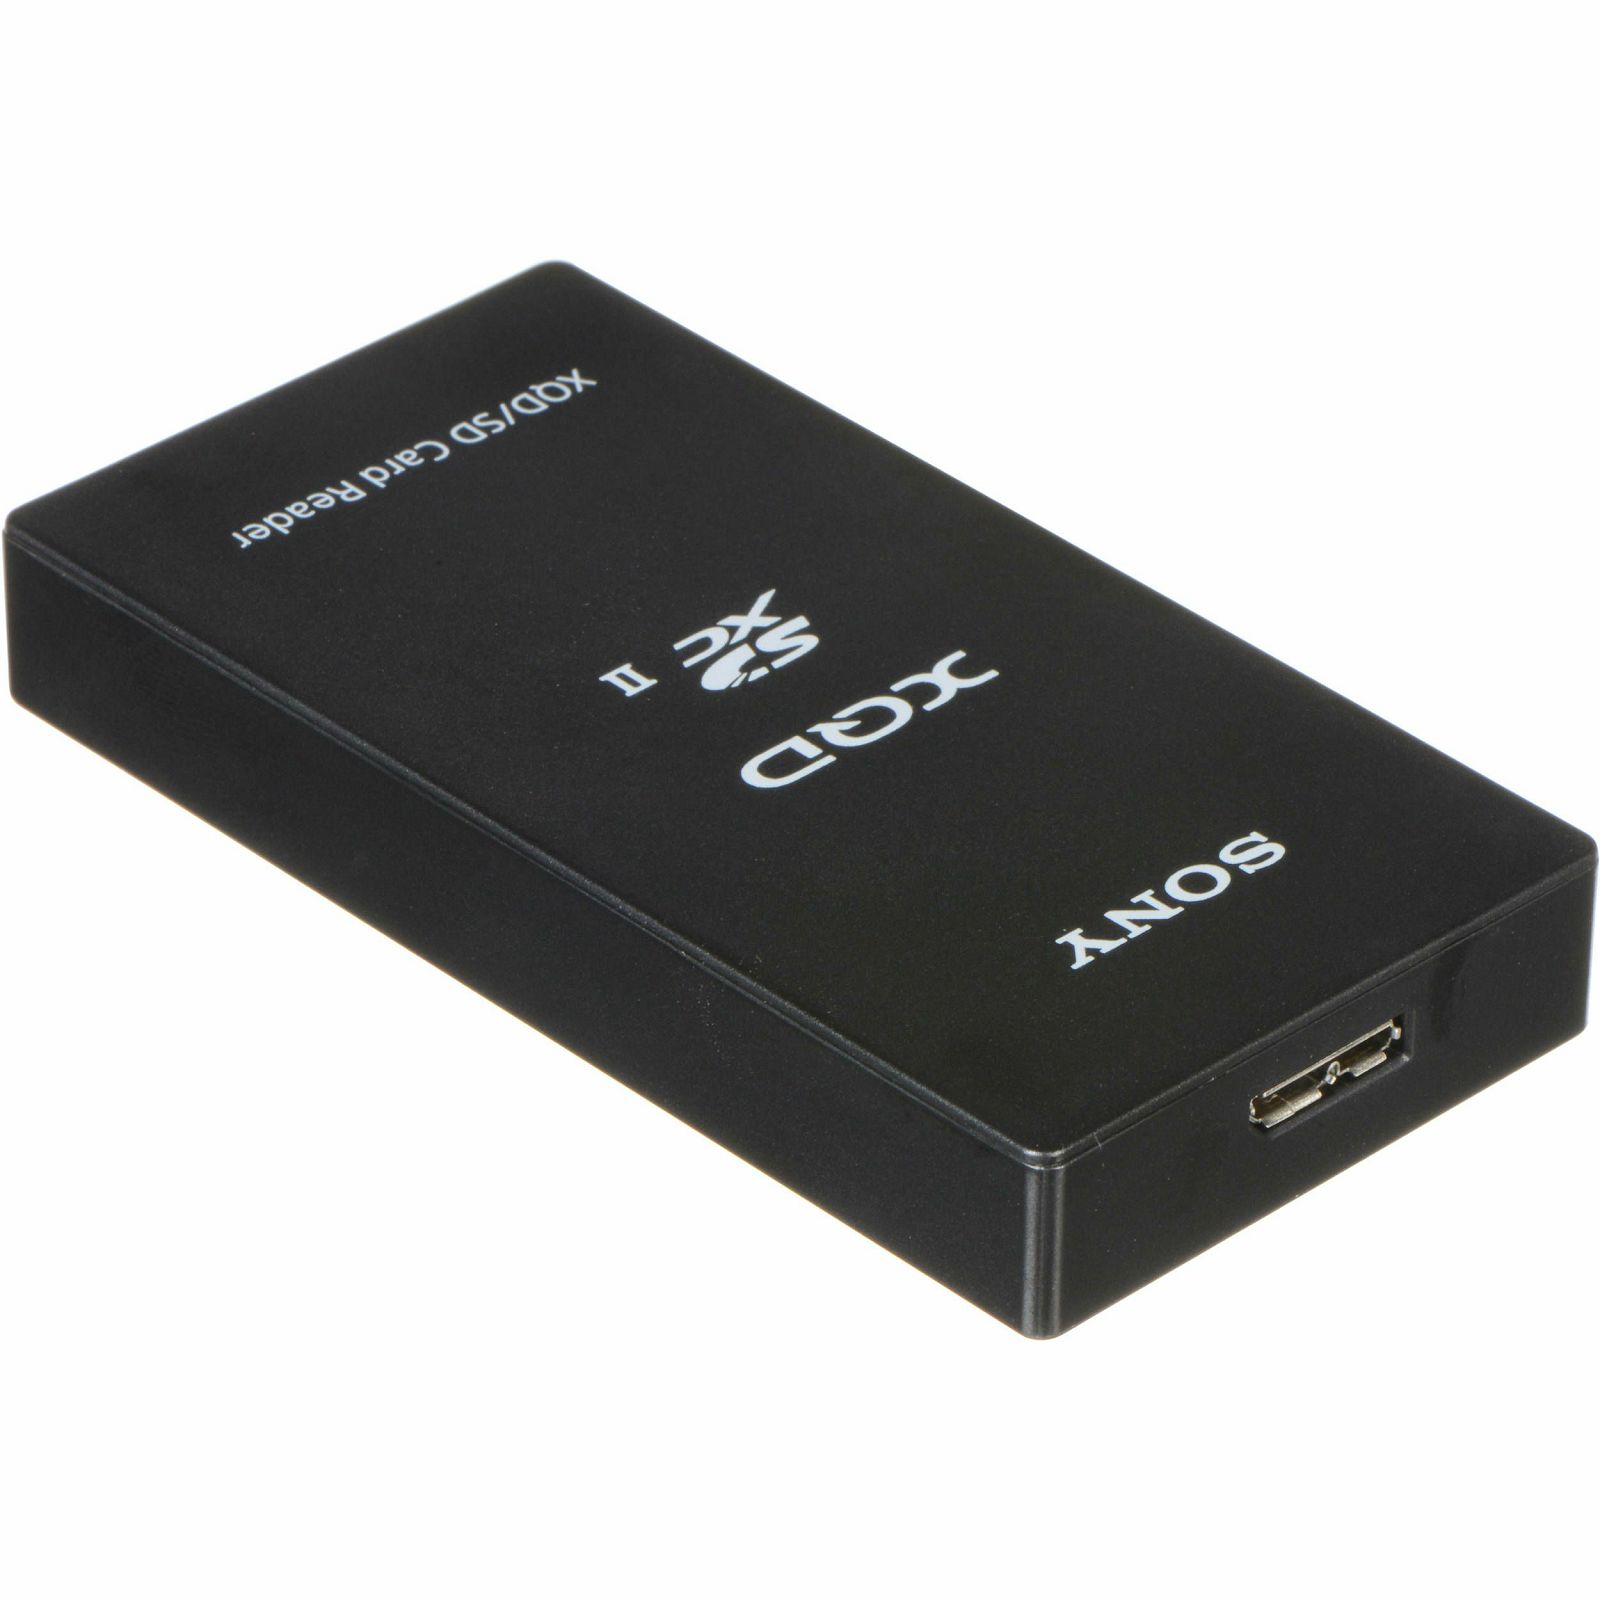 Sony čitač kartica XQD i SD Card Reader MRWE90